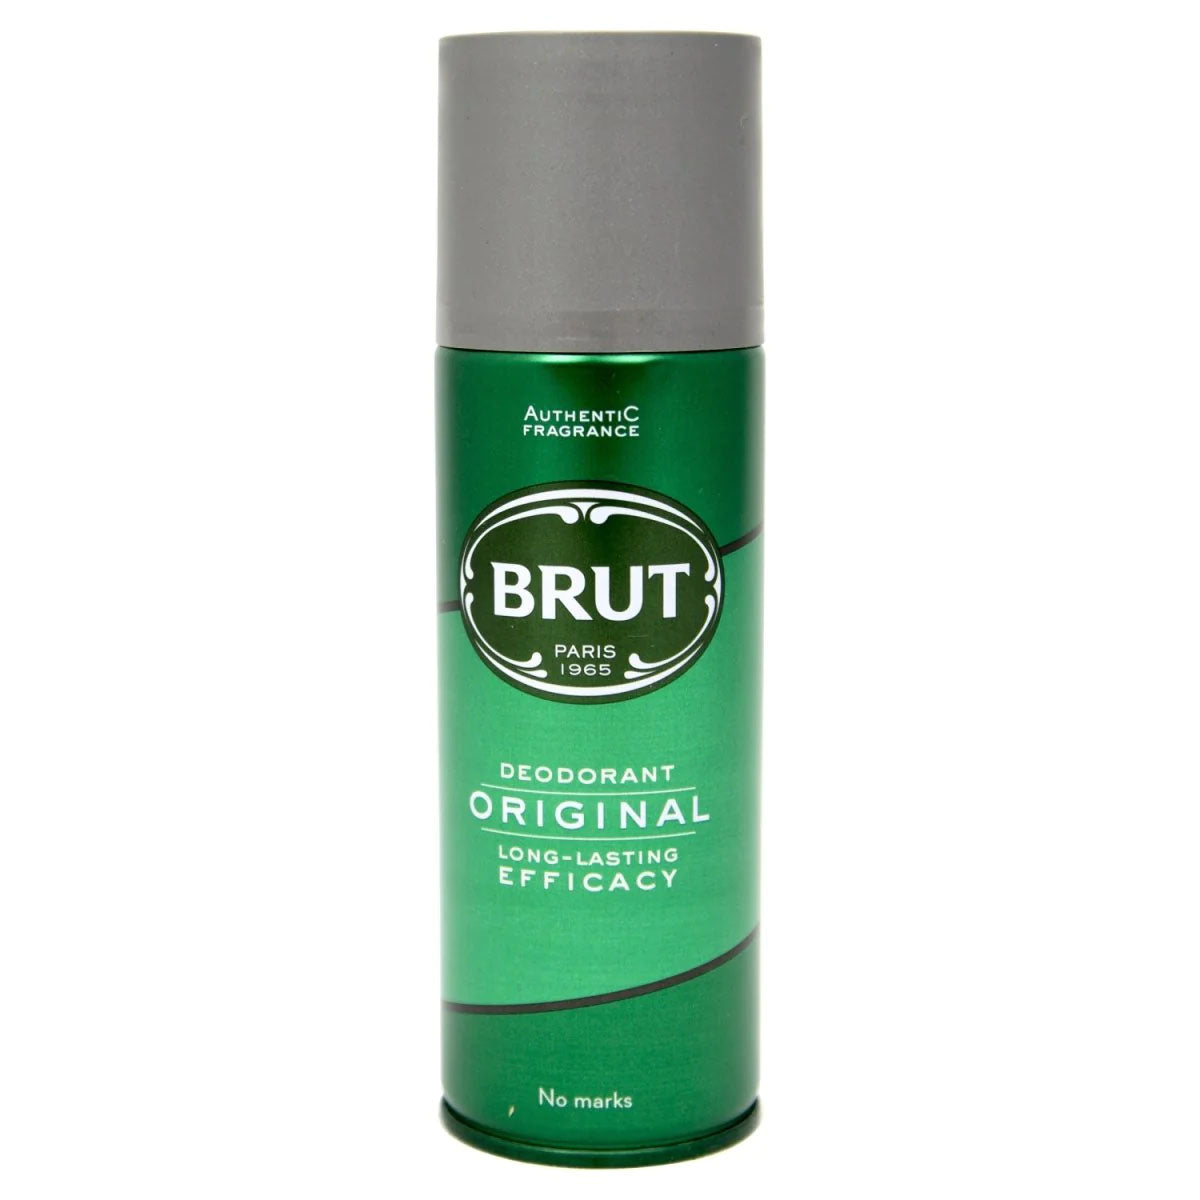 Brut - Deodorant Spray Original - 200ml on a white background.